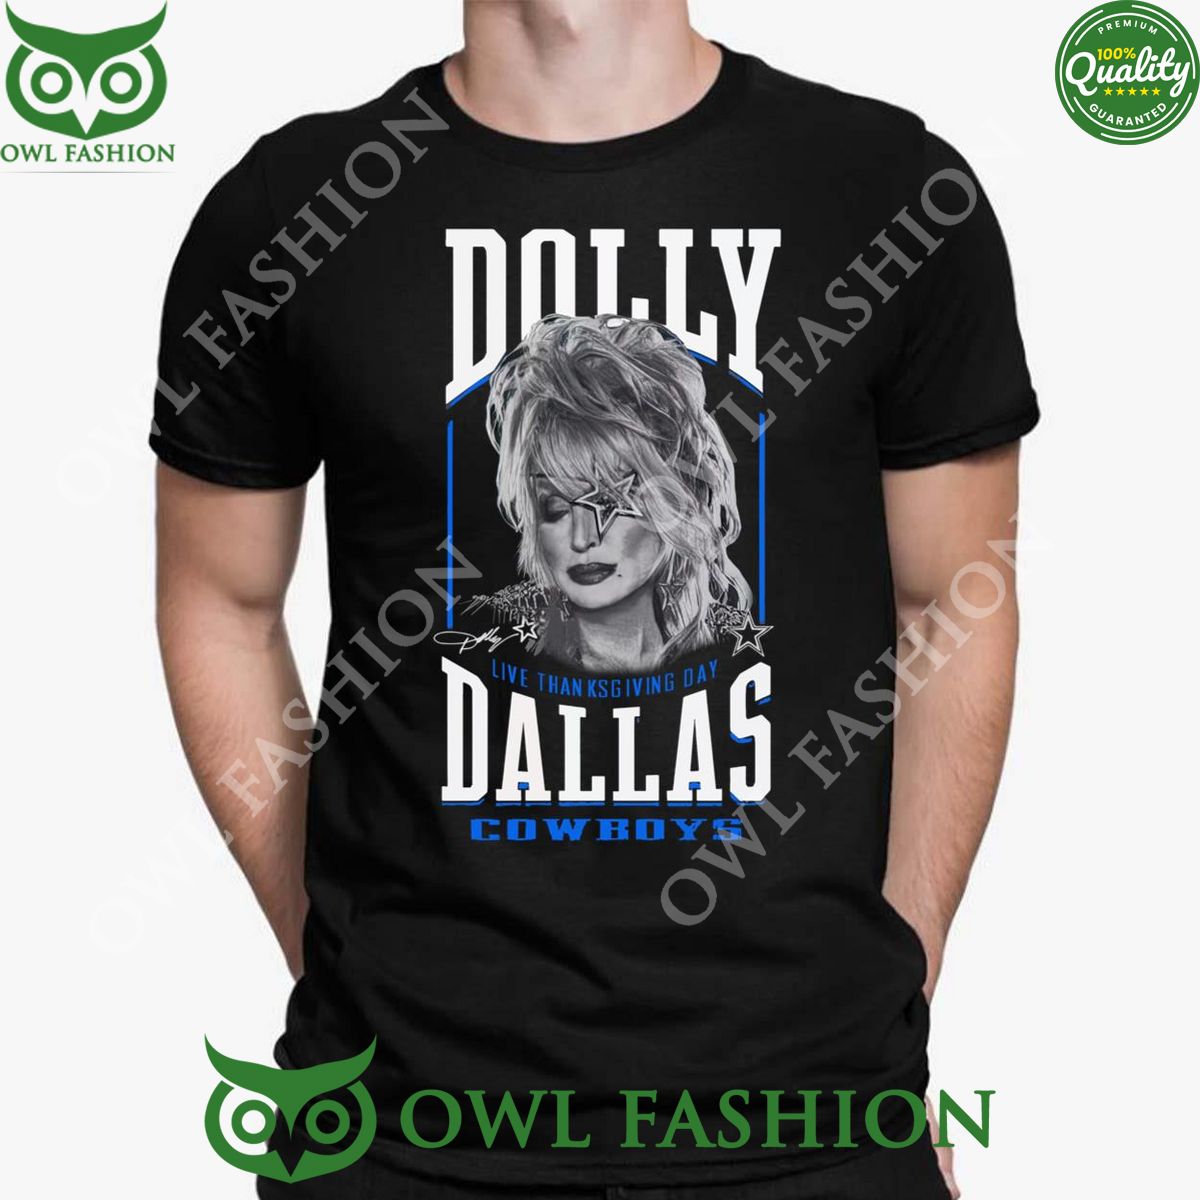 Dolly Parton Dallas Cowboys Live Thanksgiving Shirt Hoodie